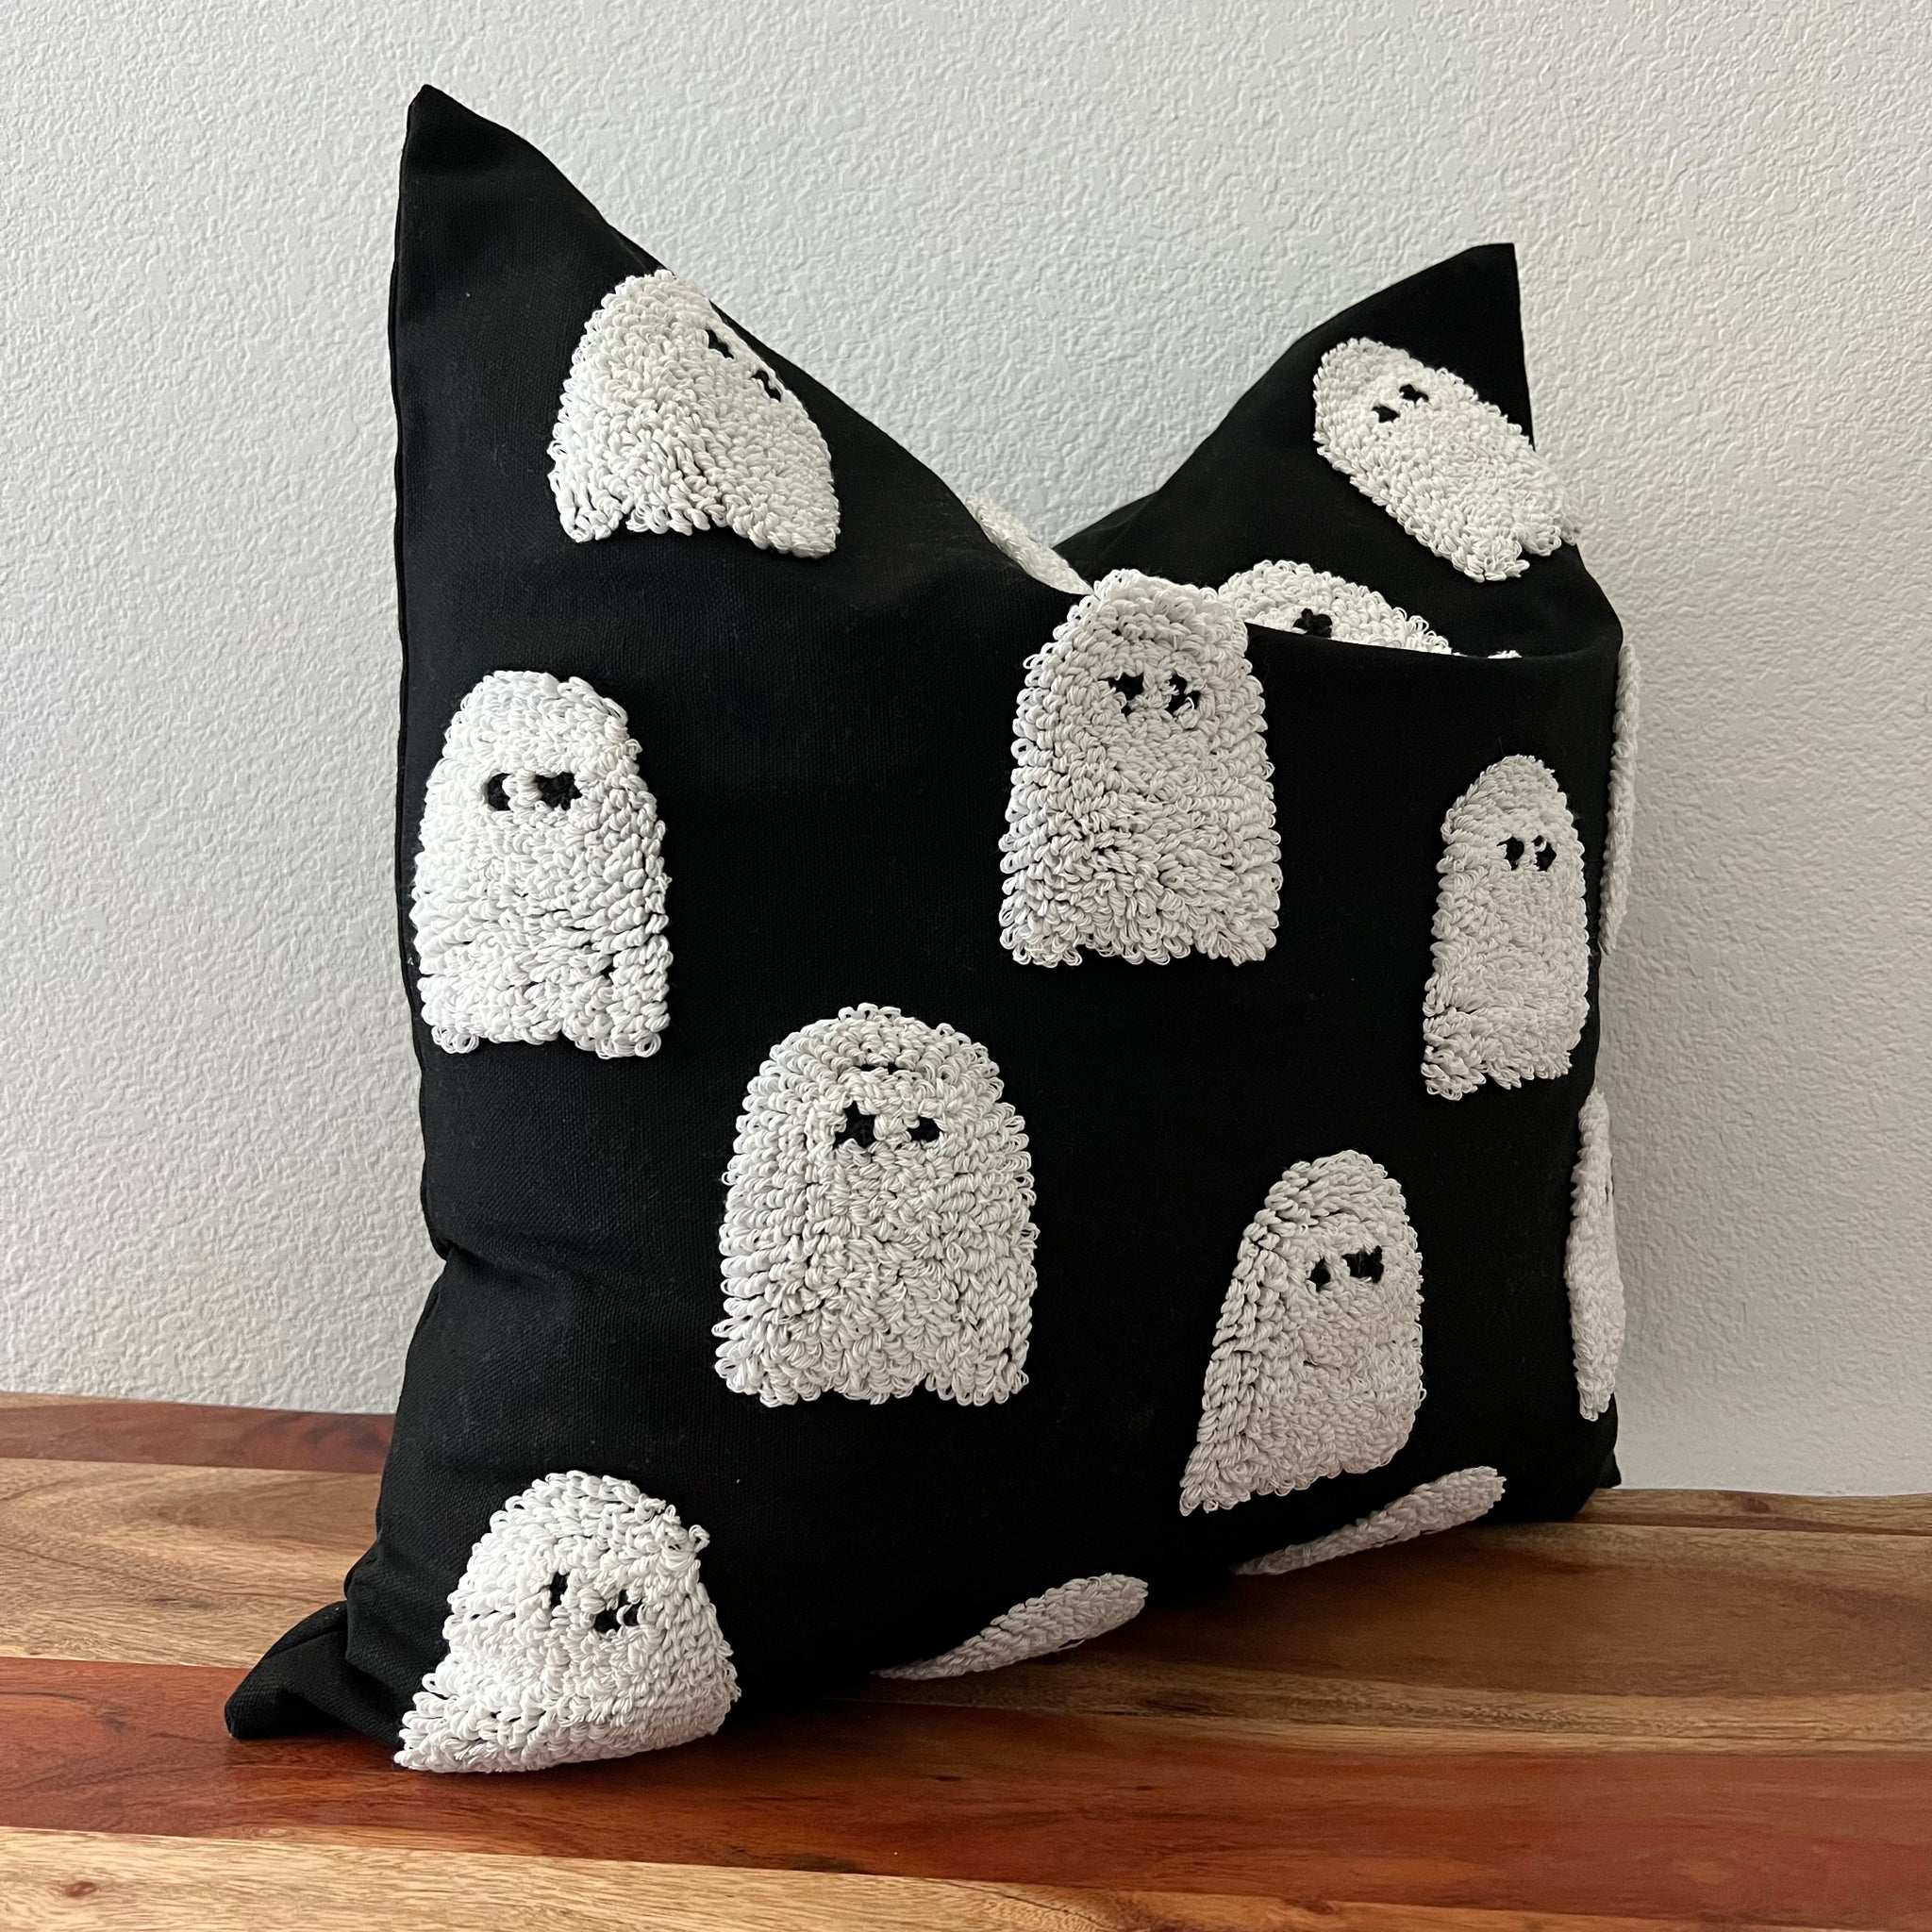 G128 18 x 18 in Halloween Spooky Waterproof Pillow, Set of 4